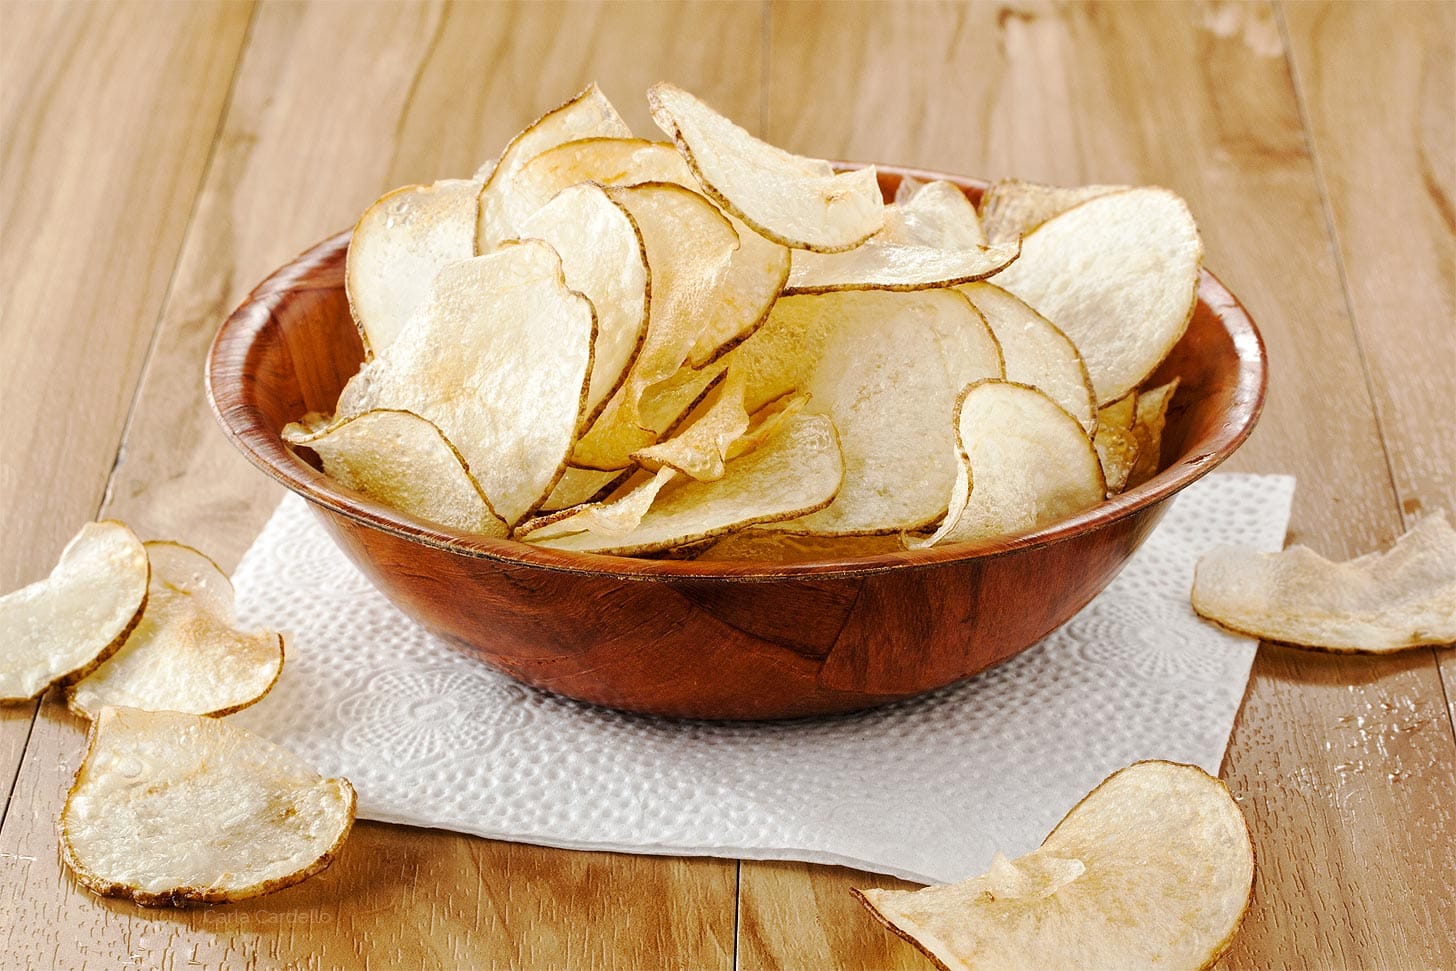 Bowl of salt and vinegar chips